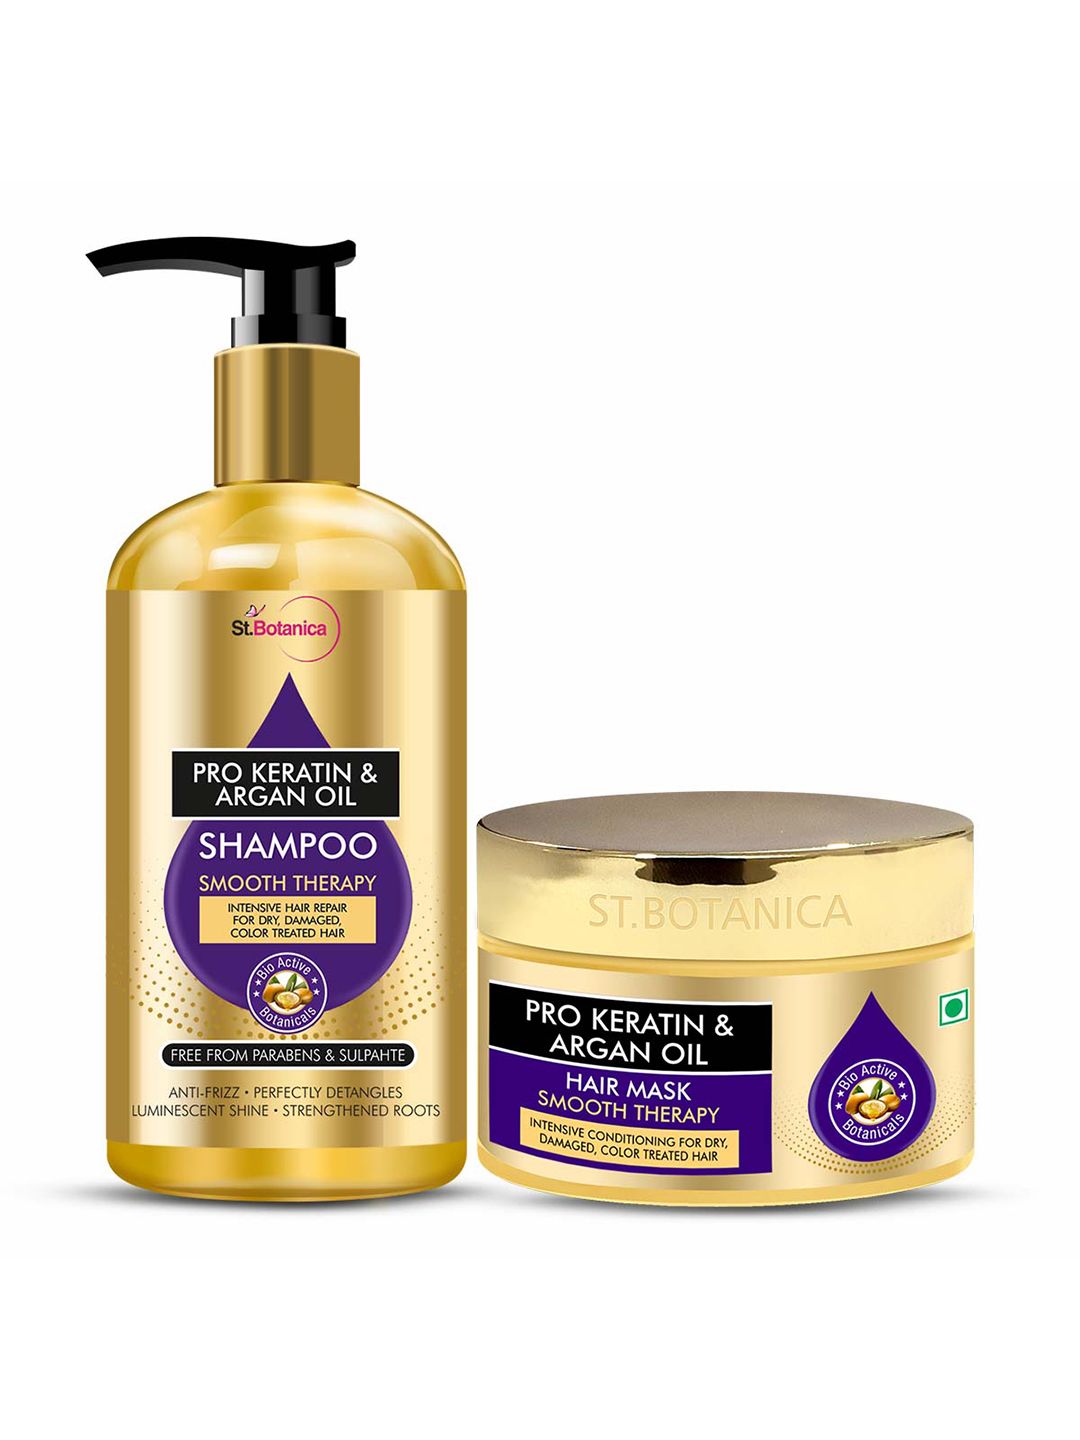 St.Botanica Pro Keratin & Argan Oil Shampoo + Hair Mask - 500 ml Price in India